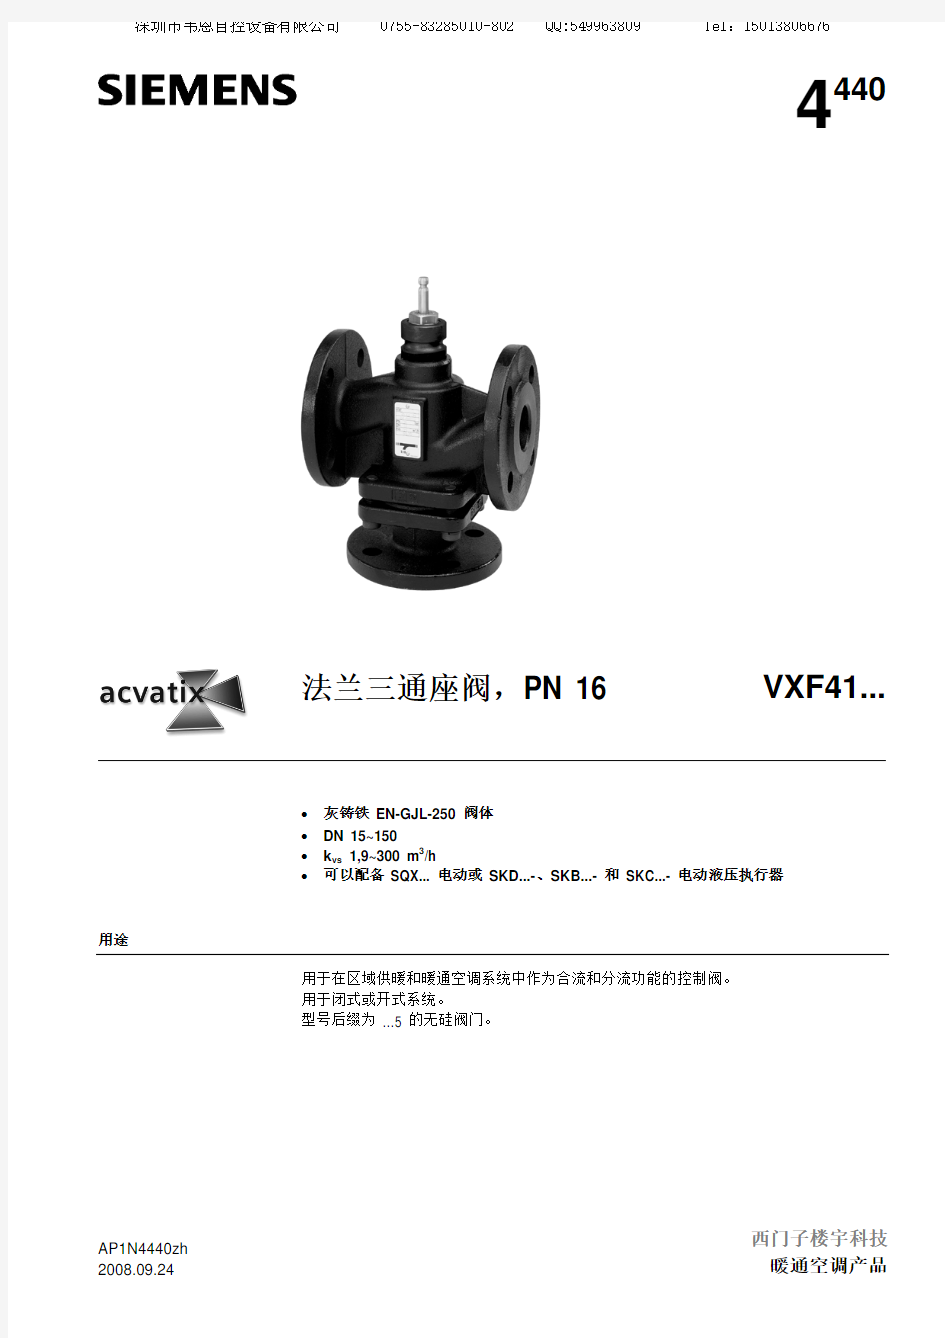 VXF41…三通调节阀